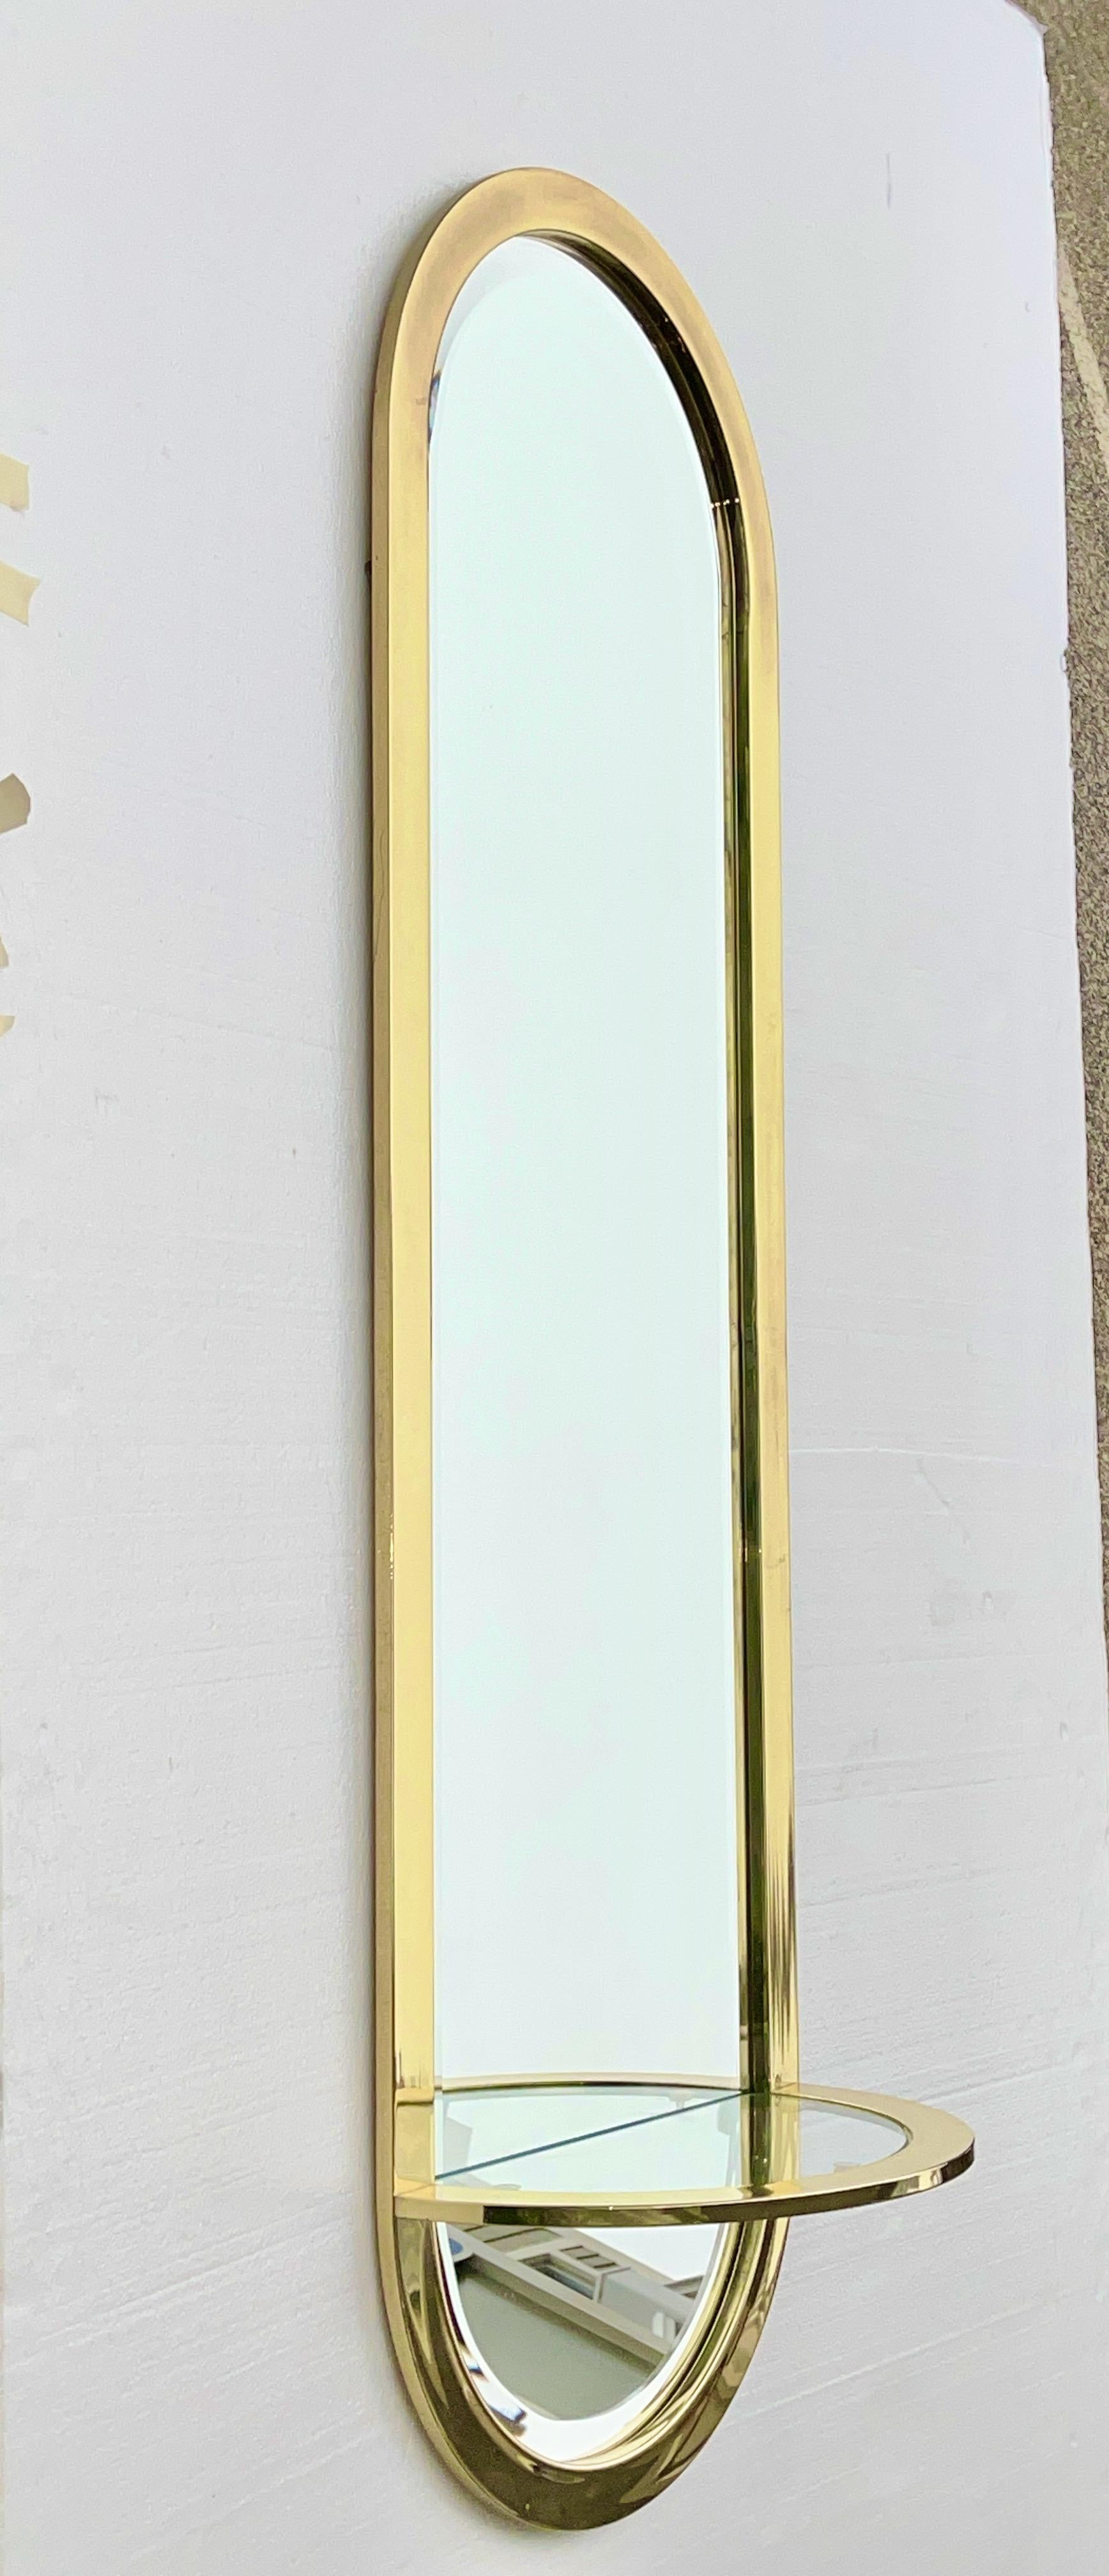 Beveled DIA Design Institute America Brass Racetrack Oval Mirror with Demilune Shelf For Sale